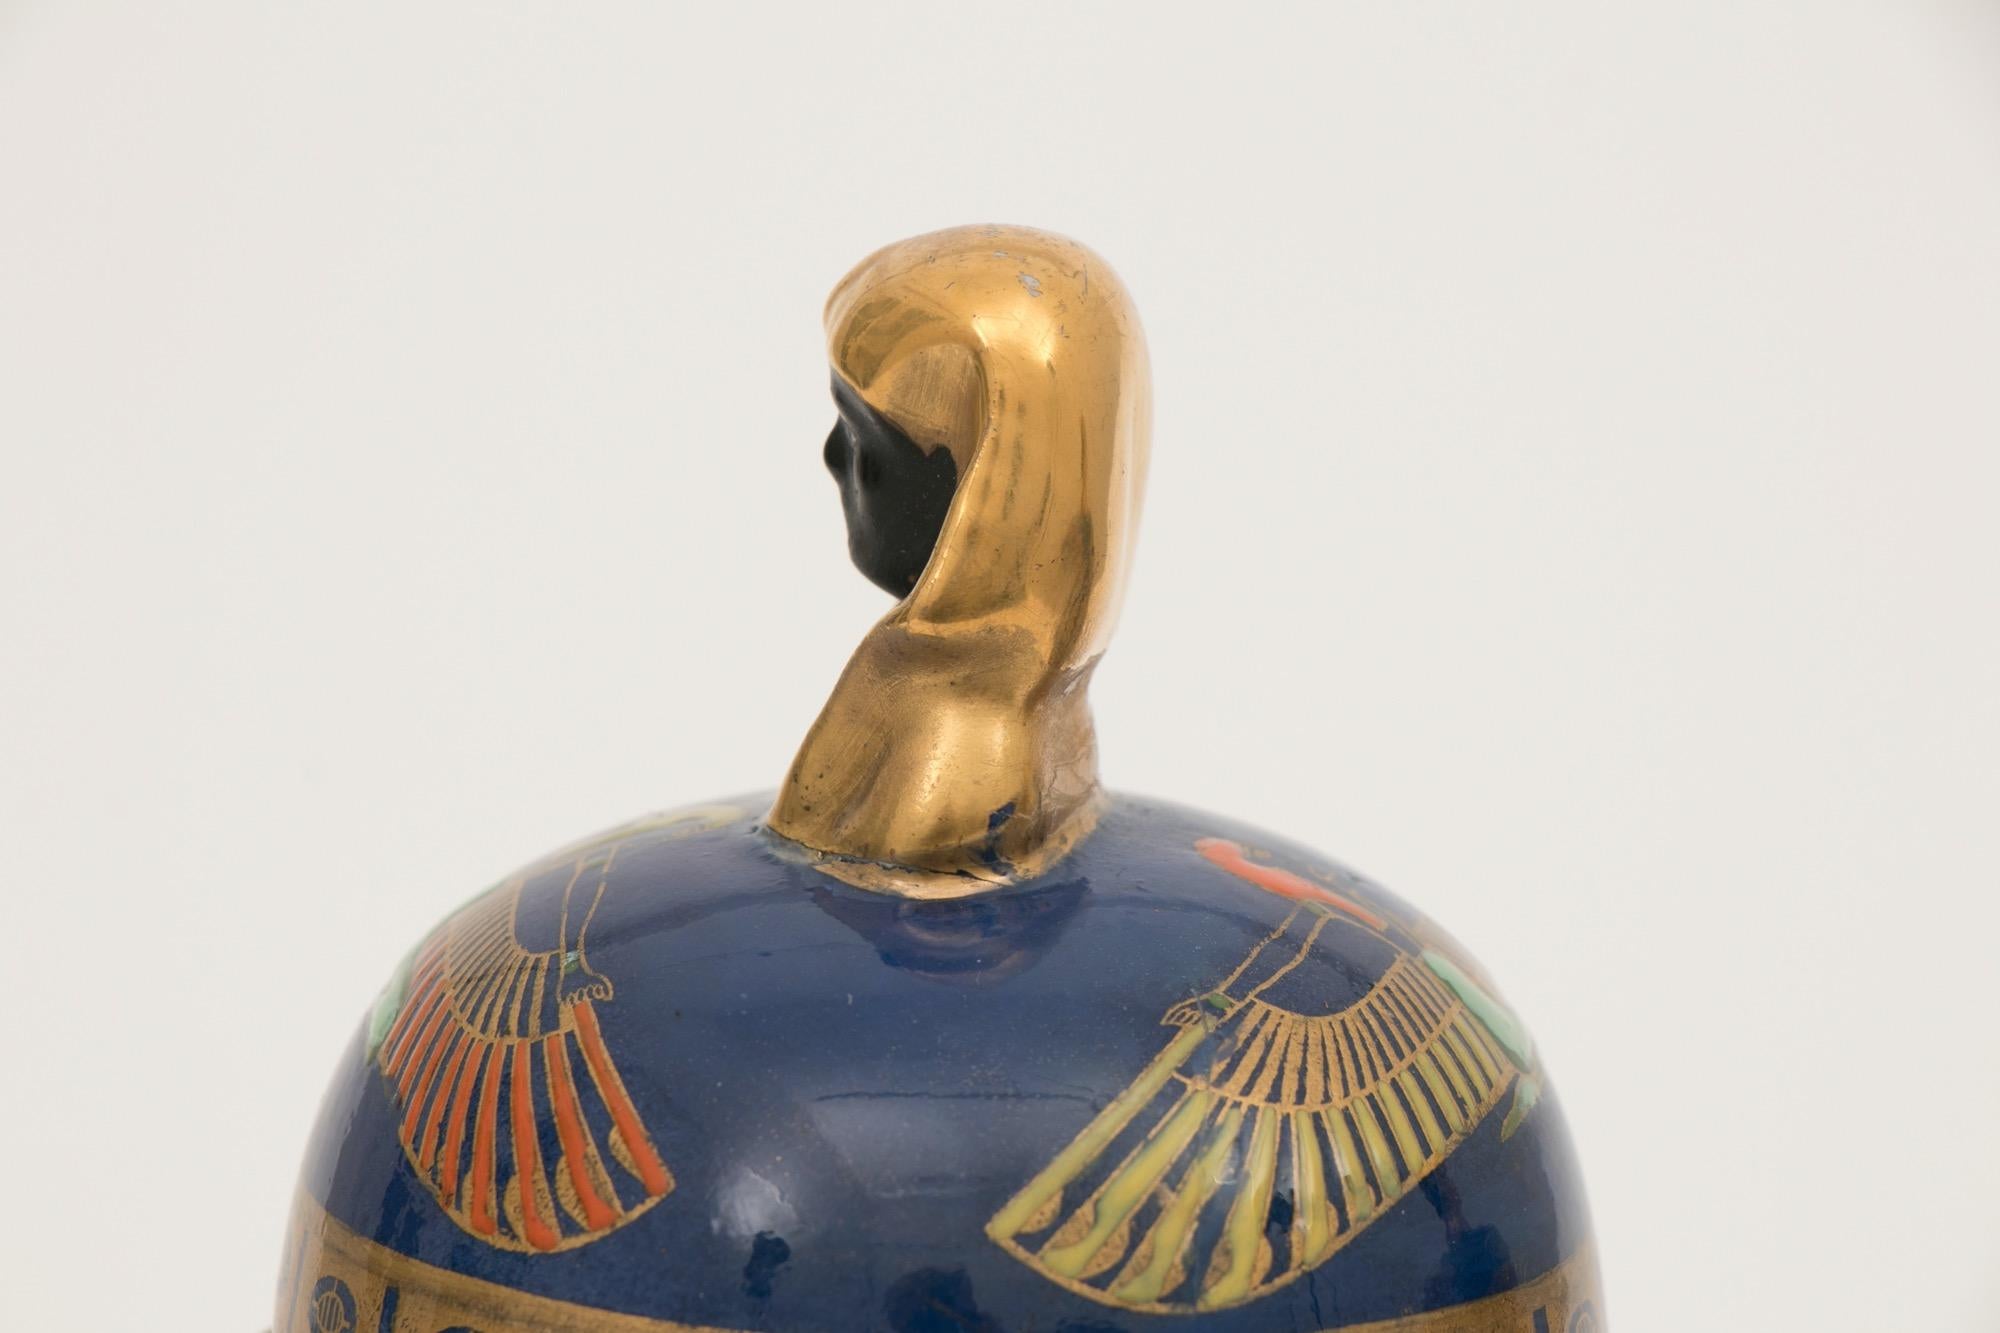 A pair of Art Deco Carltonware temple jars designed by Enoch Boulton with a Death Mask Lid. Tutankhamun design 22ct gilt and enamel decoration.
Measures: H 27cm, W 13cm, D 13cm
British, circa 1925

Carlton Ware created this design to celebrate